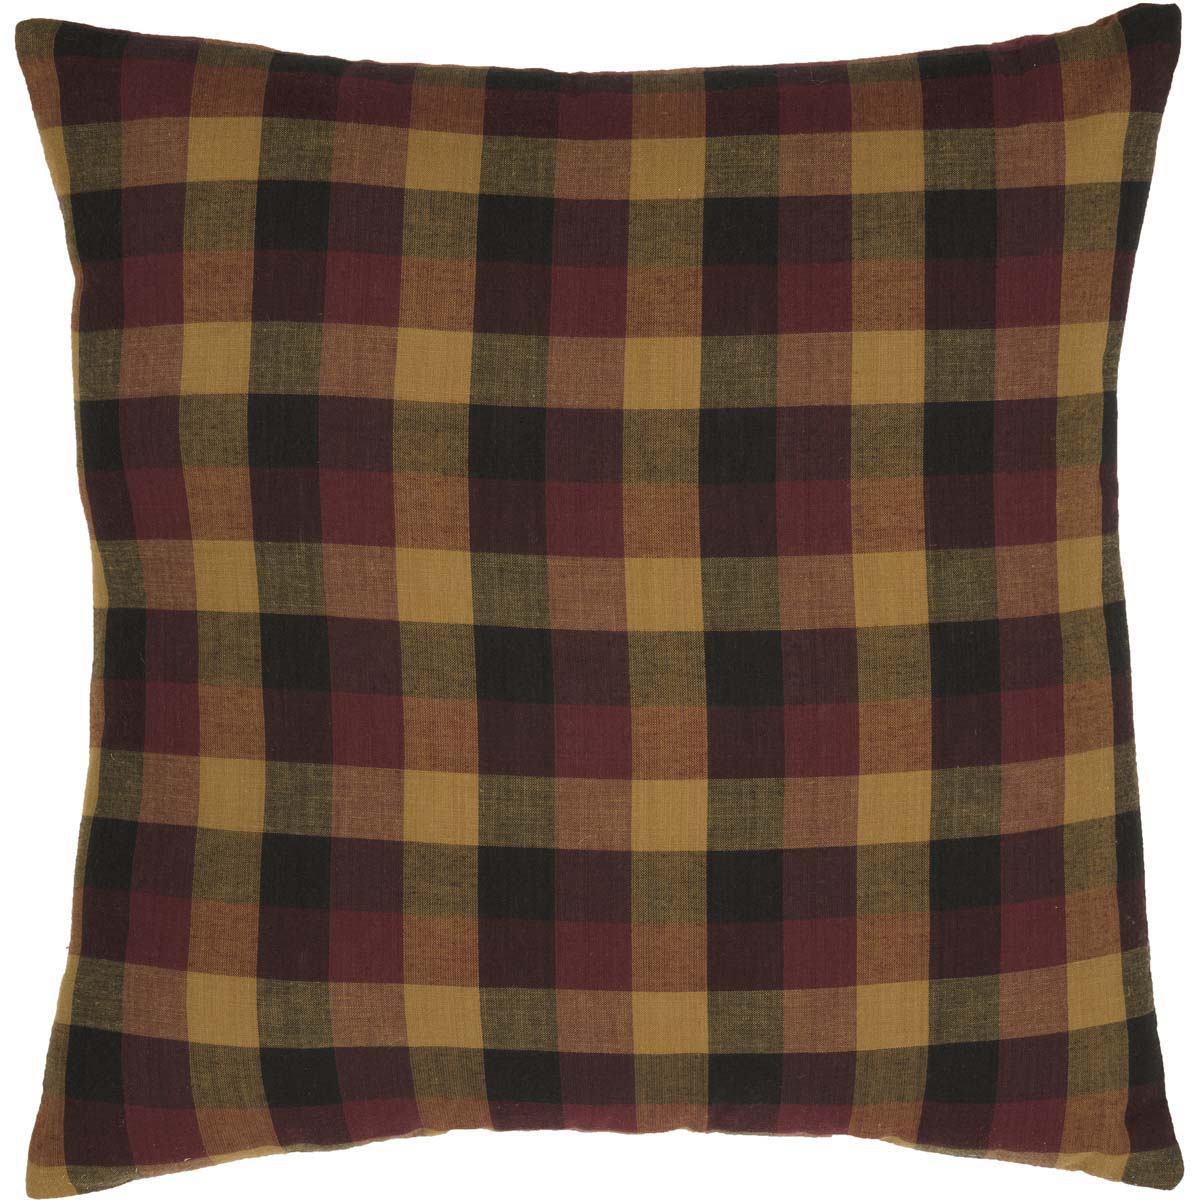 Heritage Farms Primitive Check Fabric Pillow 16'' x 16''